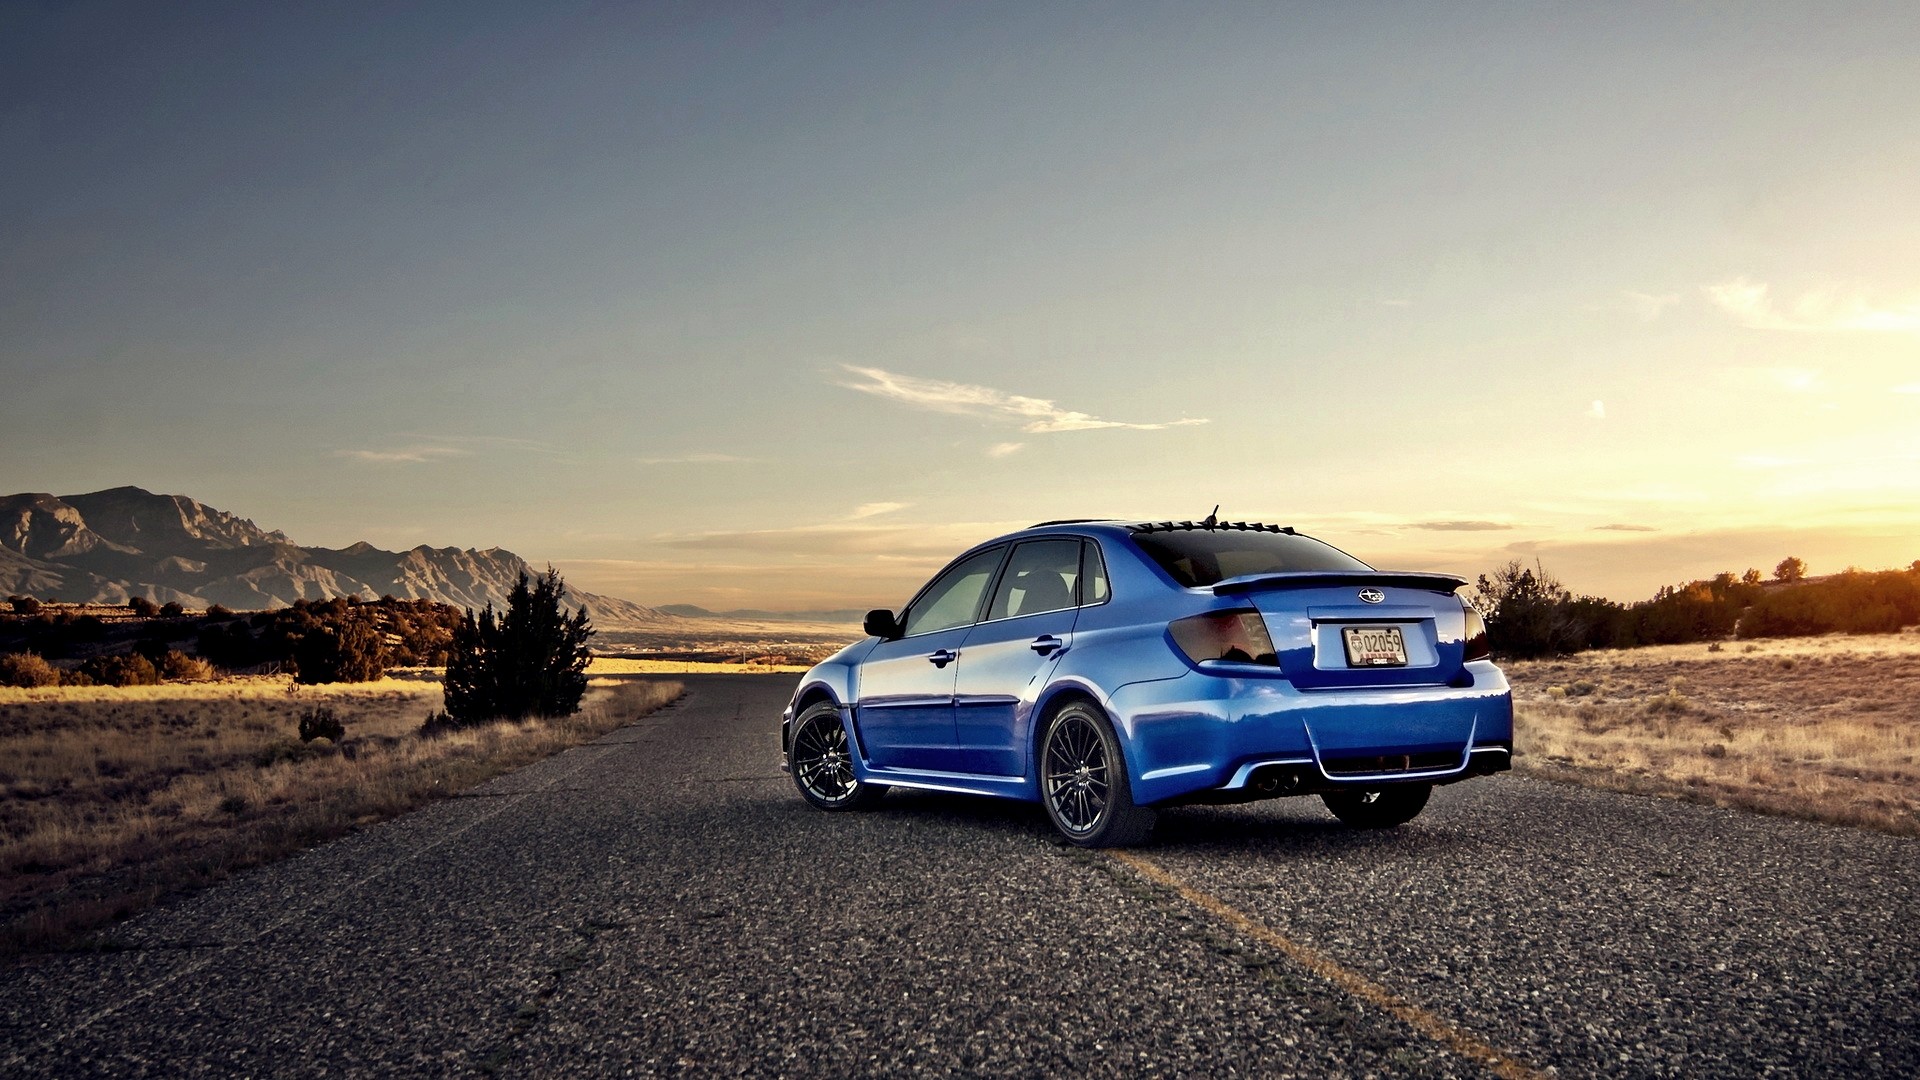 Subaru Impreza Wrx Sti Wallpaper WallpaperSafari